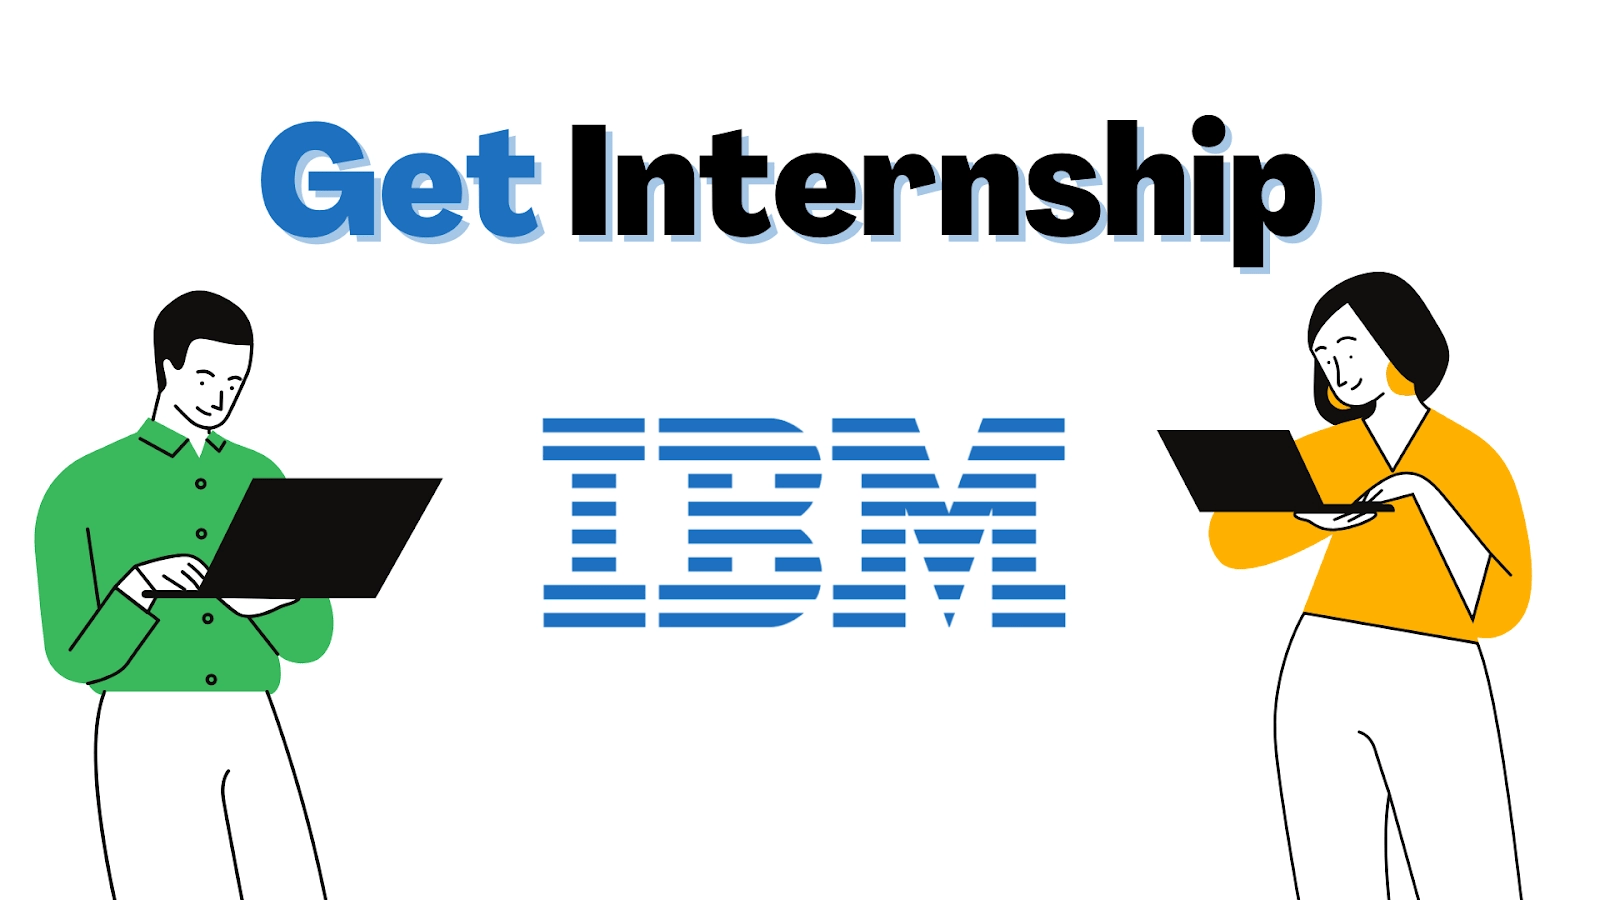 IBM Internship